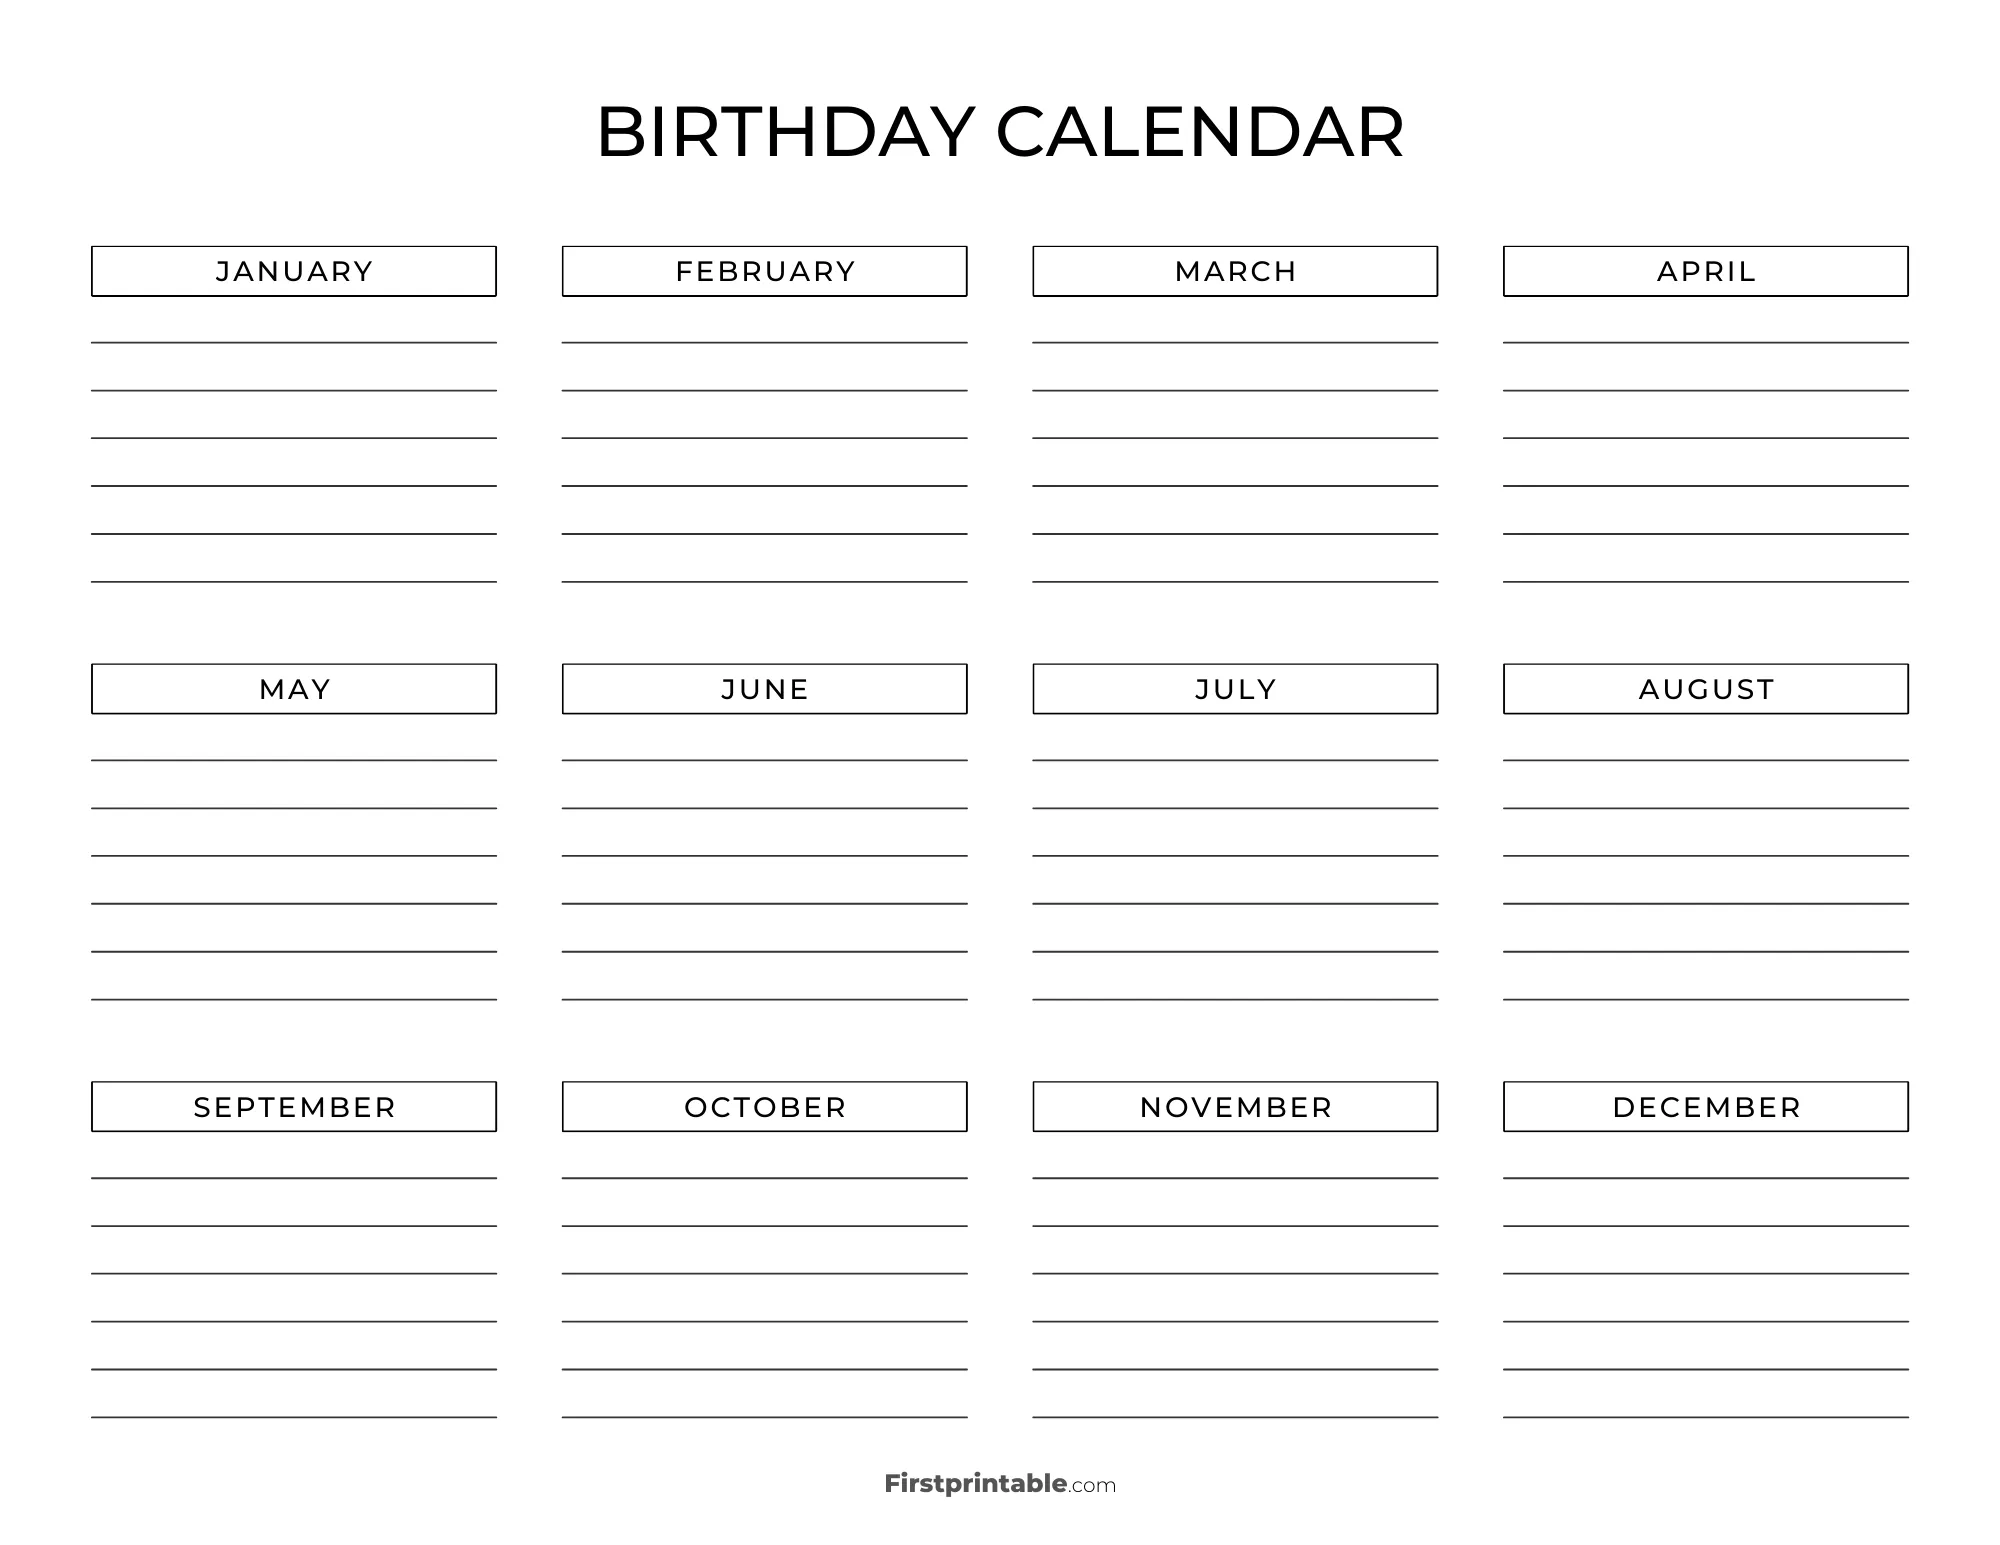 Birthday Calendar Printable Template 23